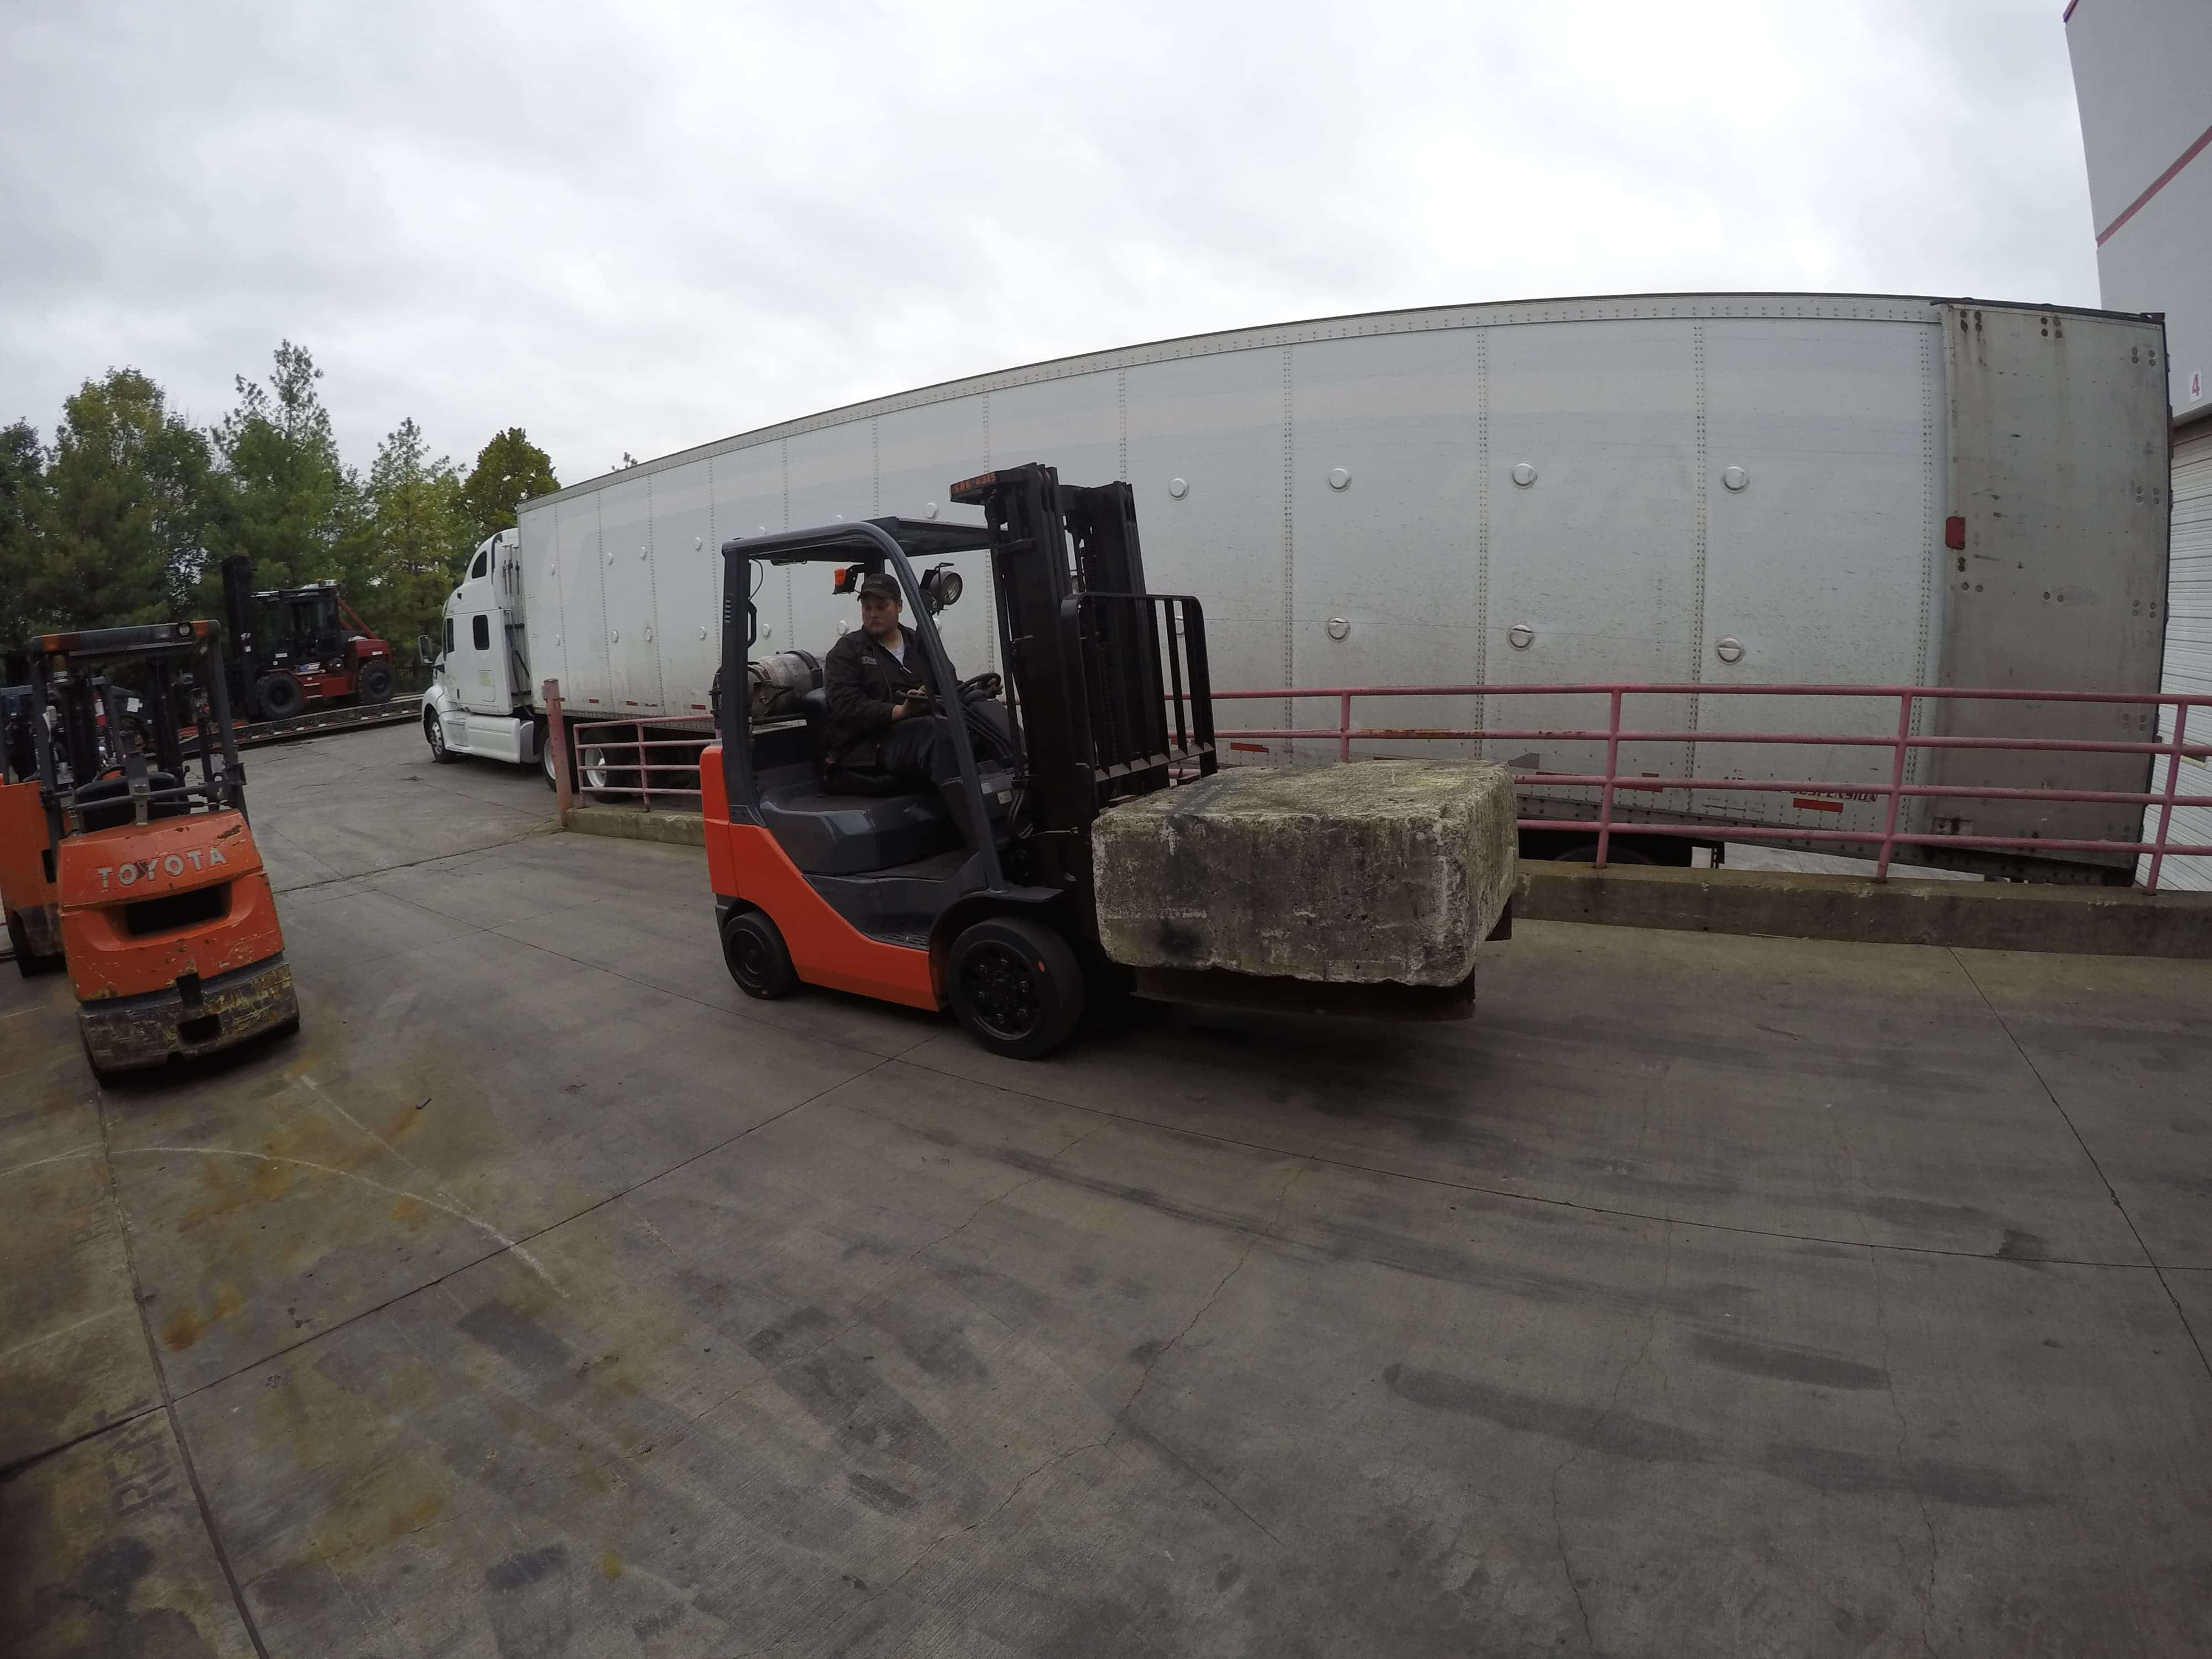 Forklift Ramps Slopes And Inclines Forklift Safety Prolift